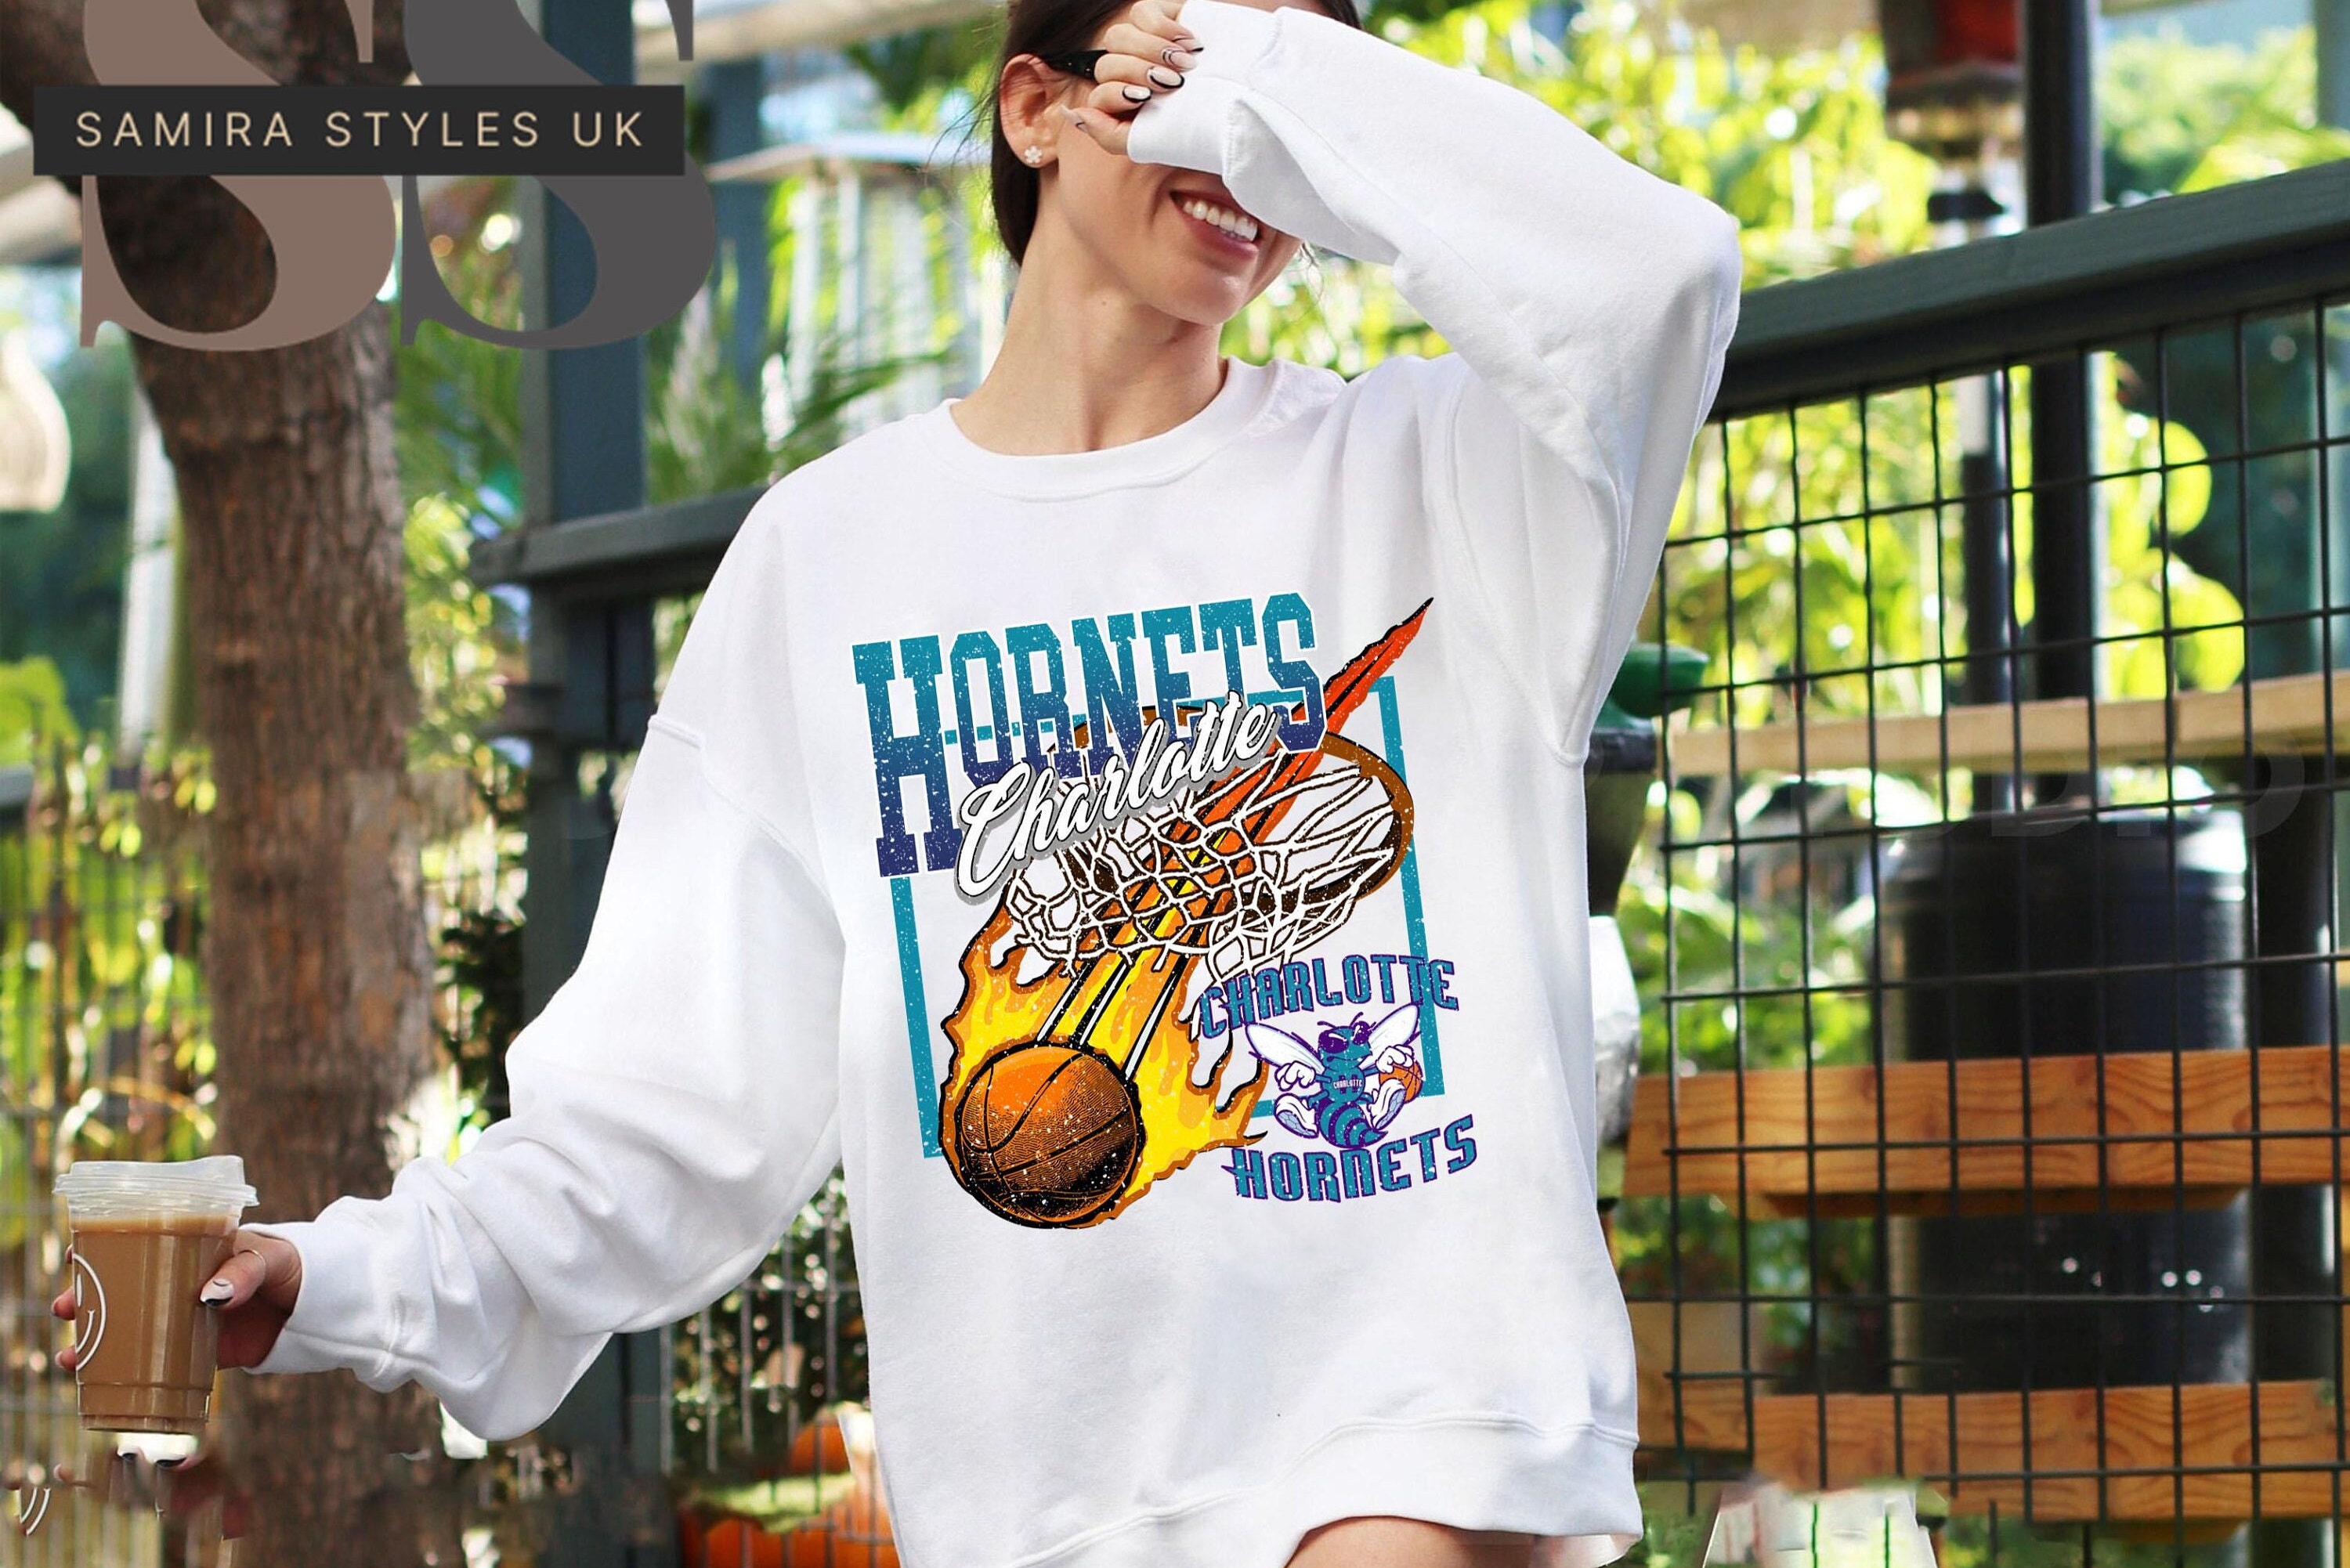 Charlotte Hornets 90's Style Vintage NBA Crewneck Sweatshirt